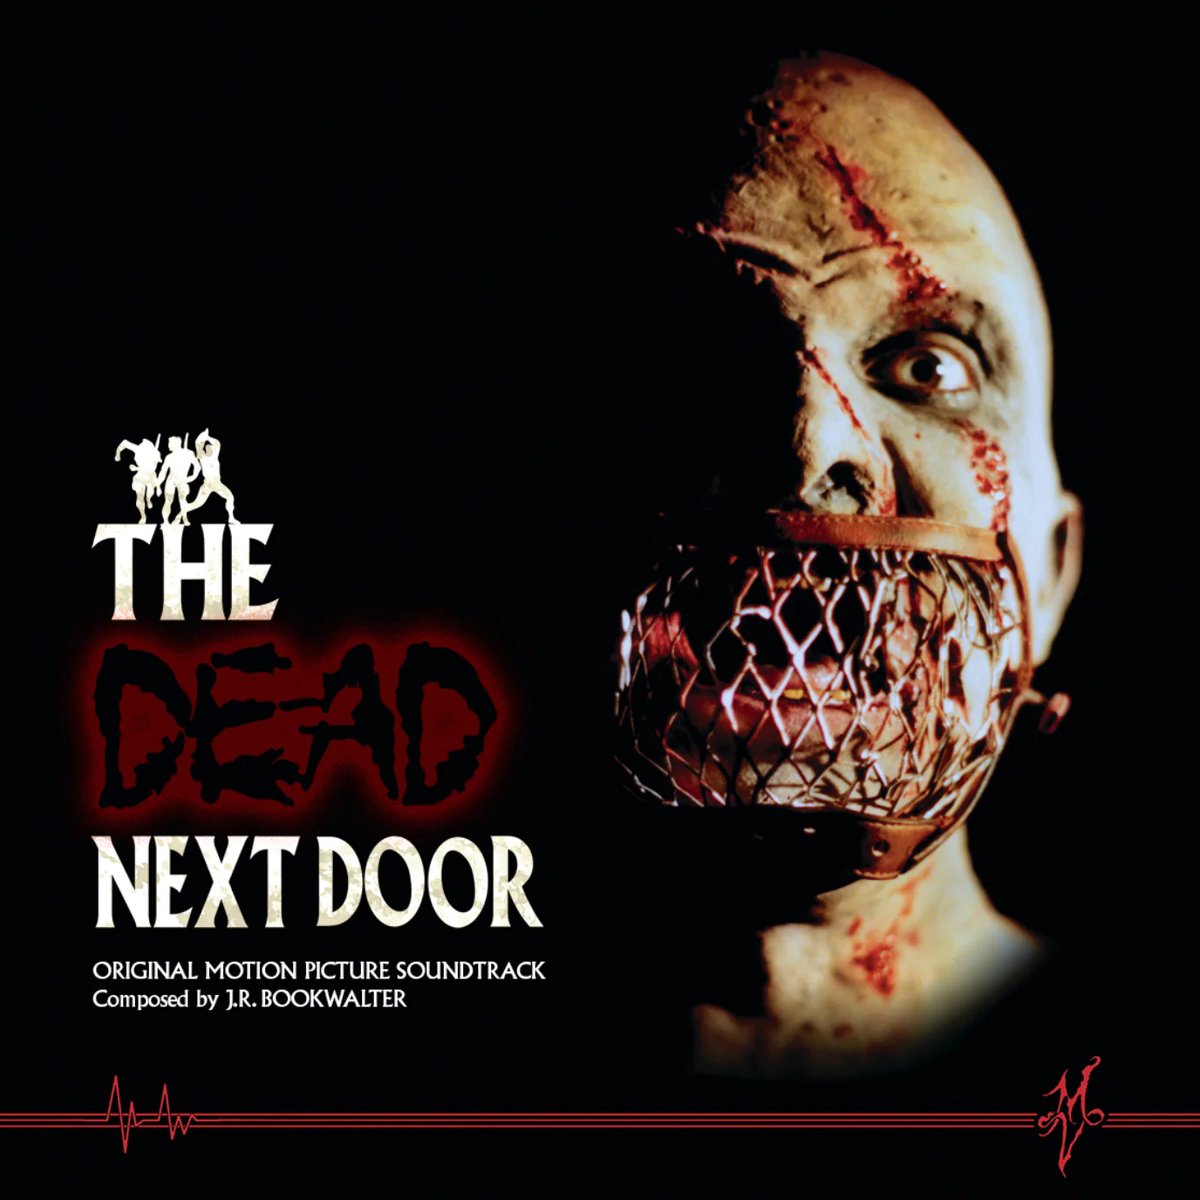 The Dead Next Door soundtrack pressed on vinyl by Mystic Vault: brokehorrorfan.com/post/732885085…

Composed by director @jrbookwalter!